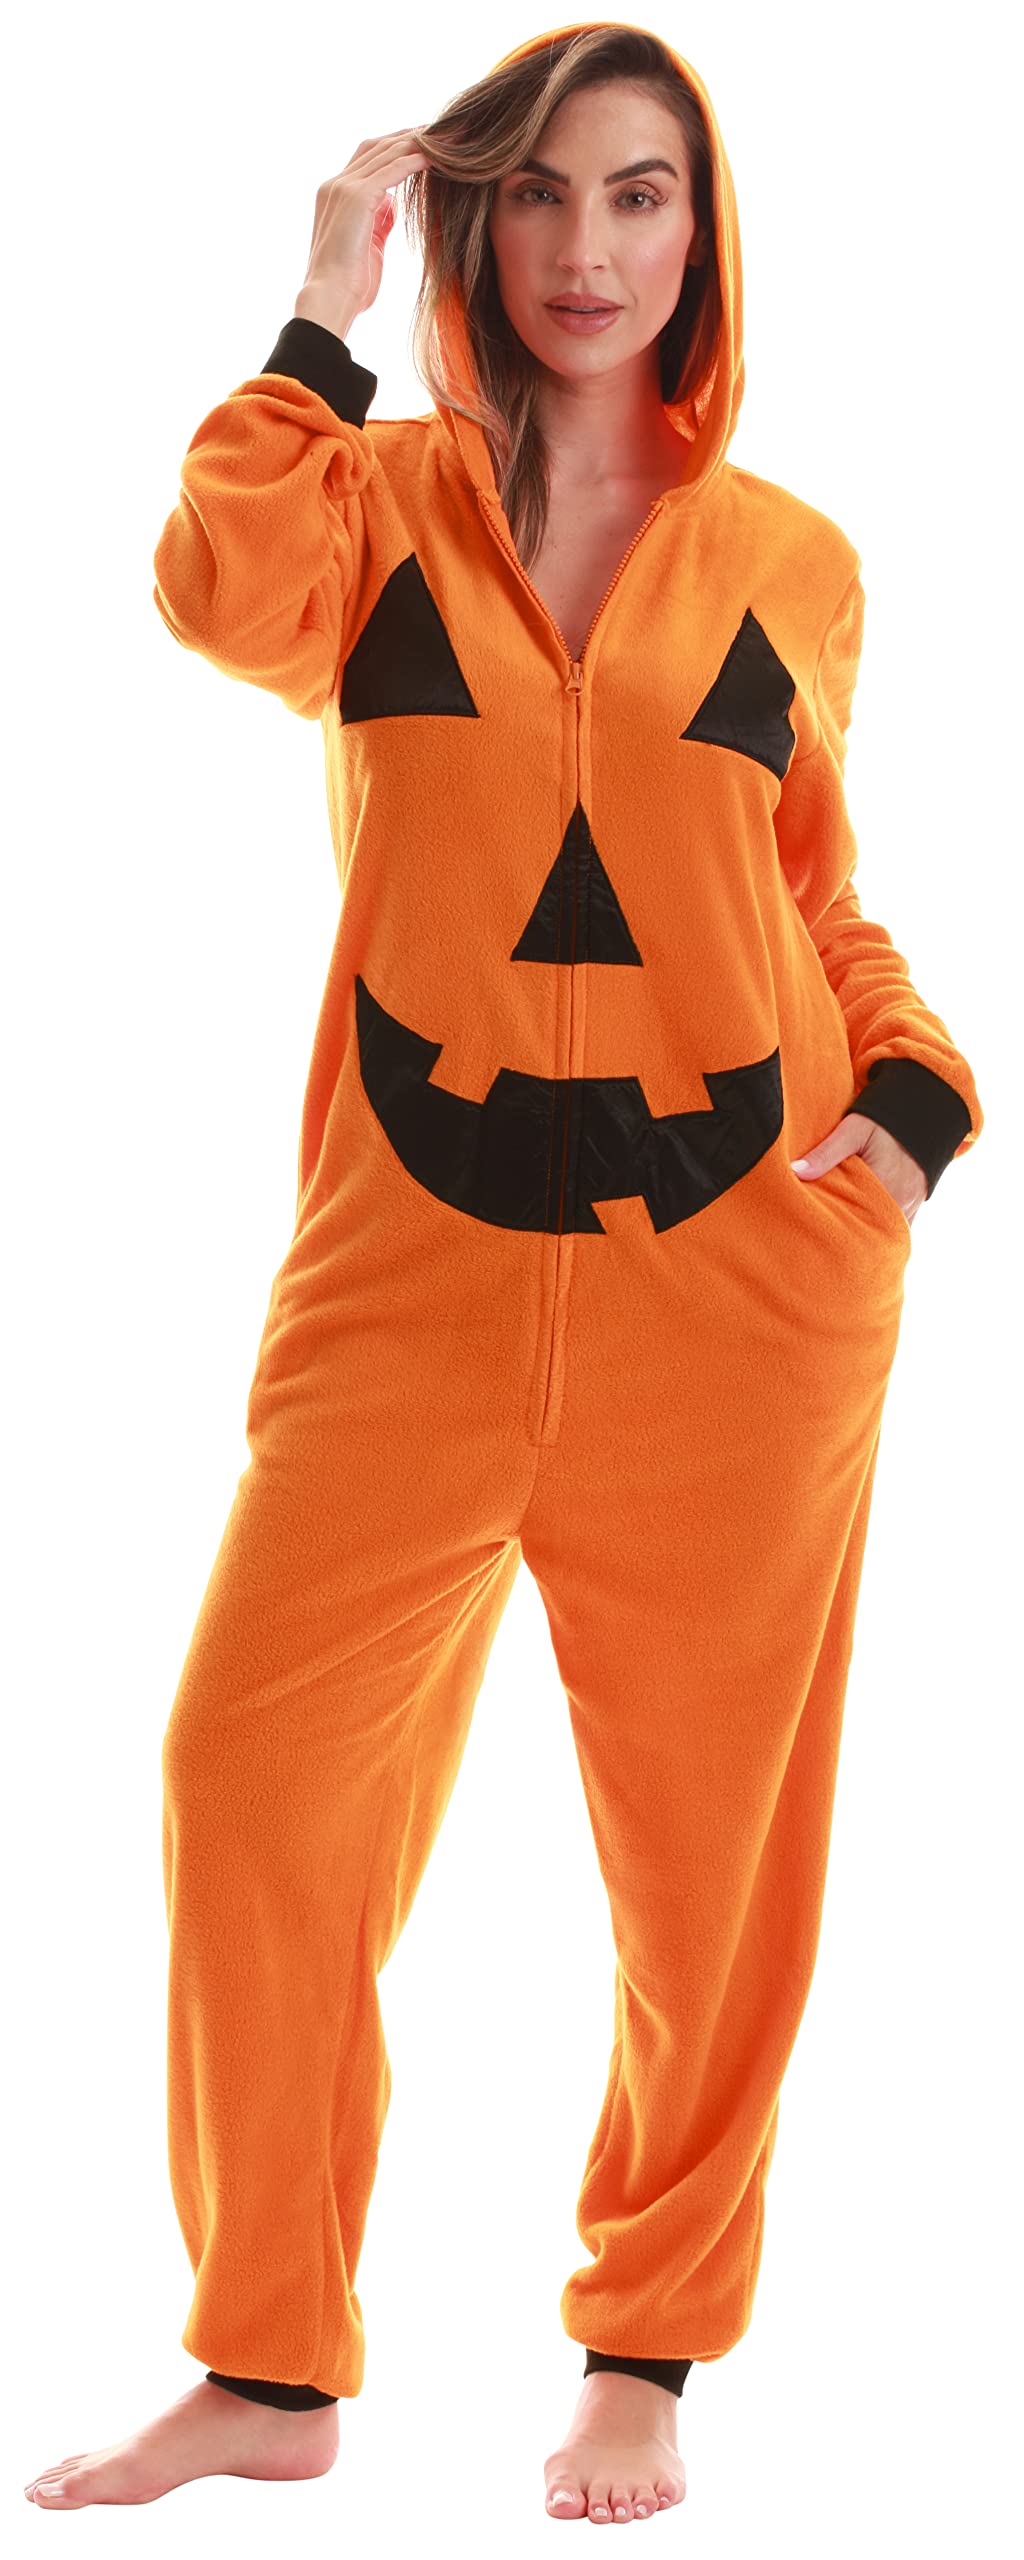 Gomind Adult Halloween Onesie / Costumes (Pumpkin, XX-Large) - Walmart.com